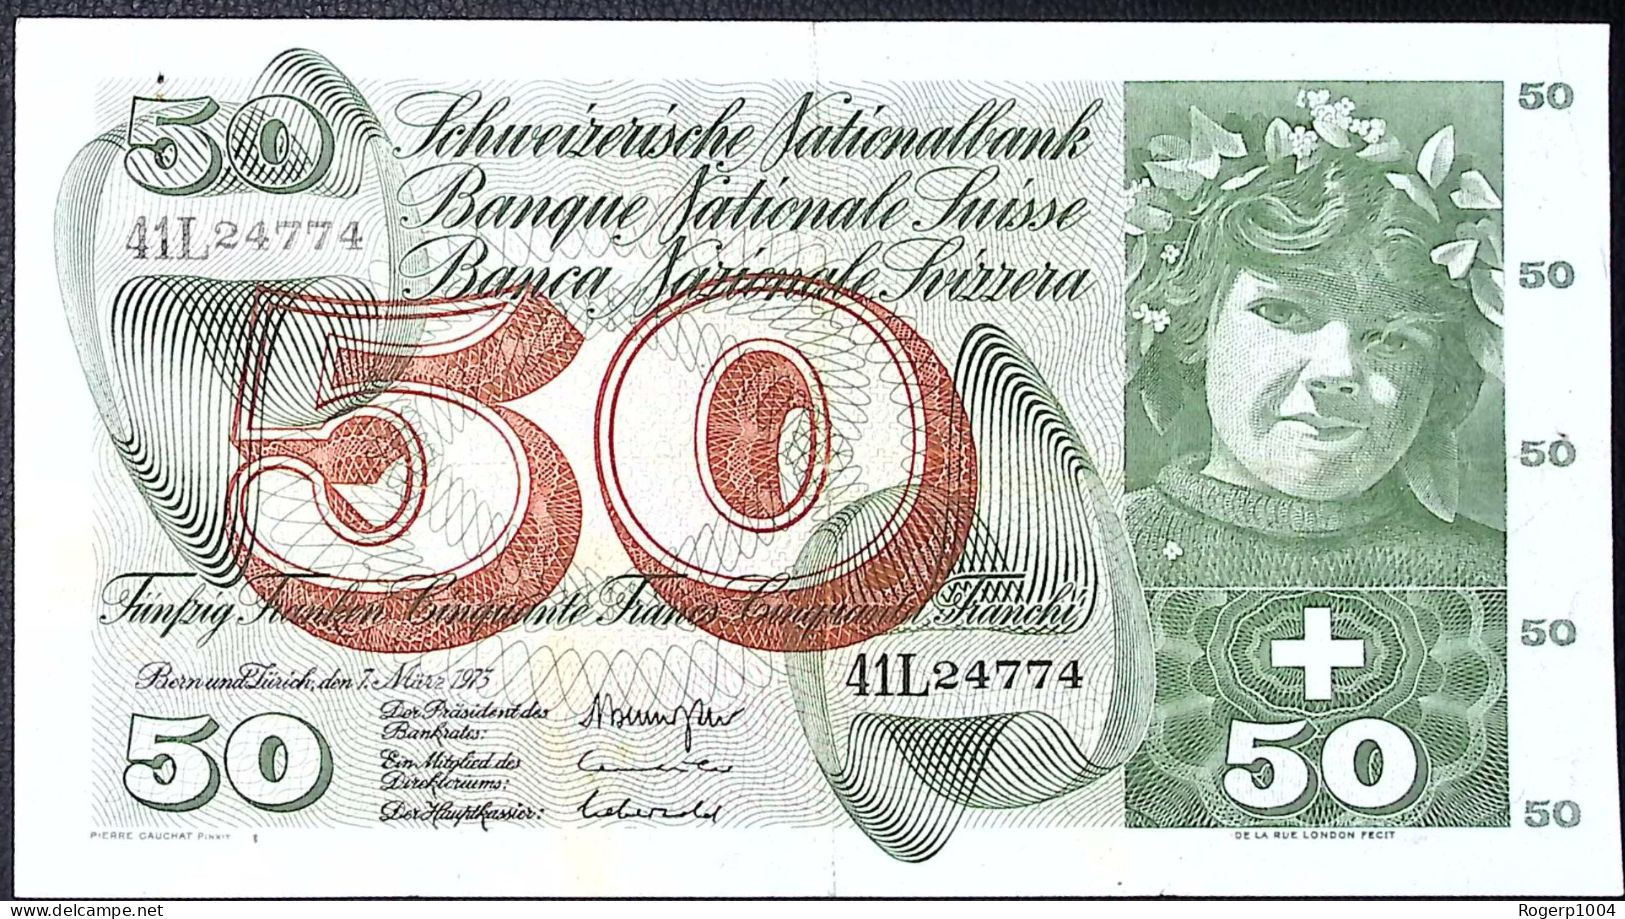 SUISSE/SWITZERLAND * 50 Francs * Cueillette Des Pommes * 07/03/73 * Etat/Grade TTB/VF - Zwitserland